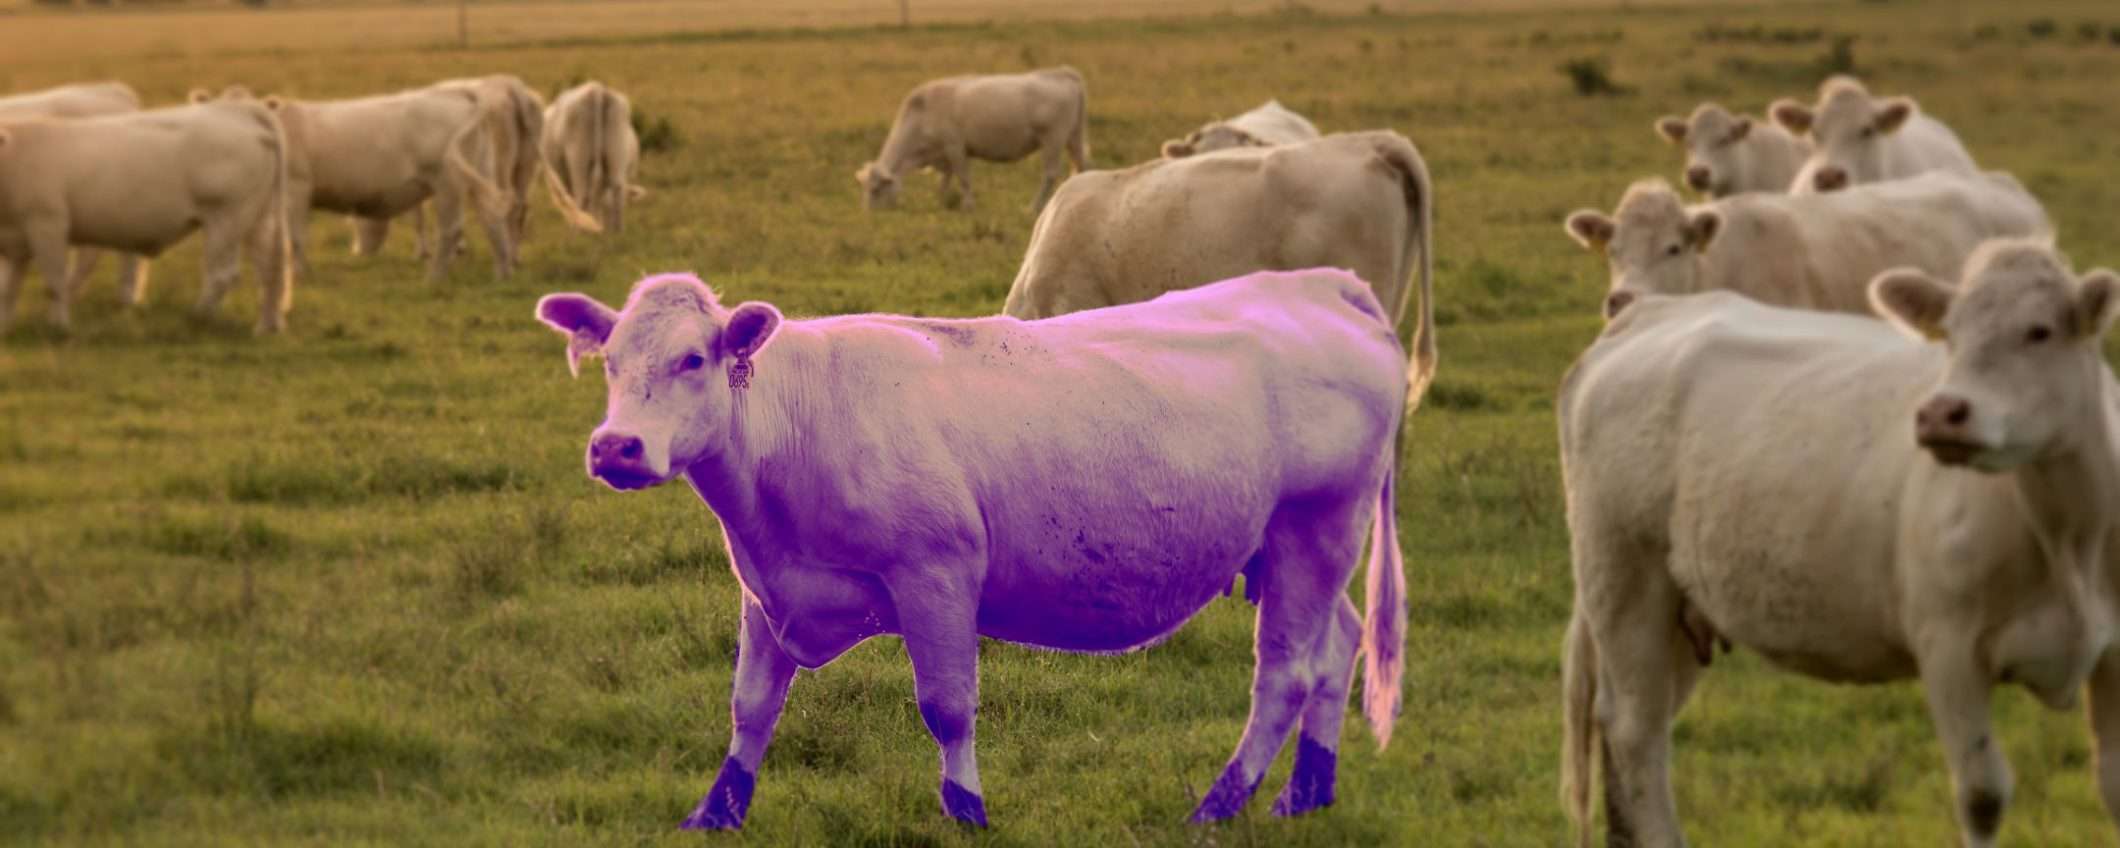 Sii una mucca viola (e buona fortuna)